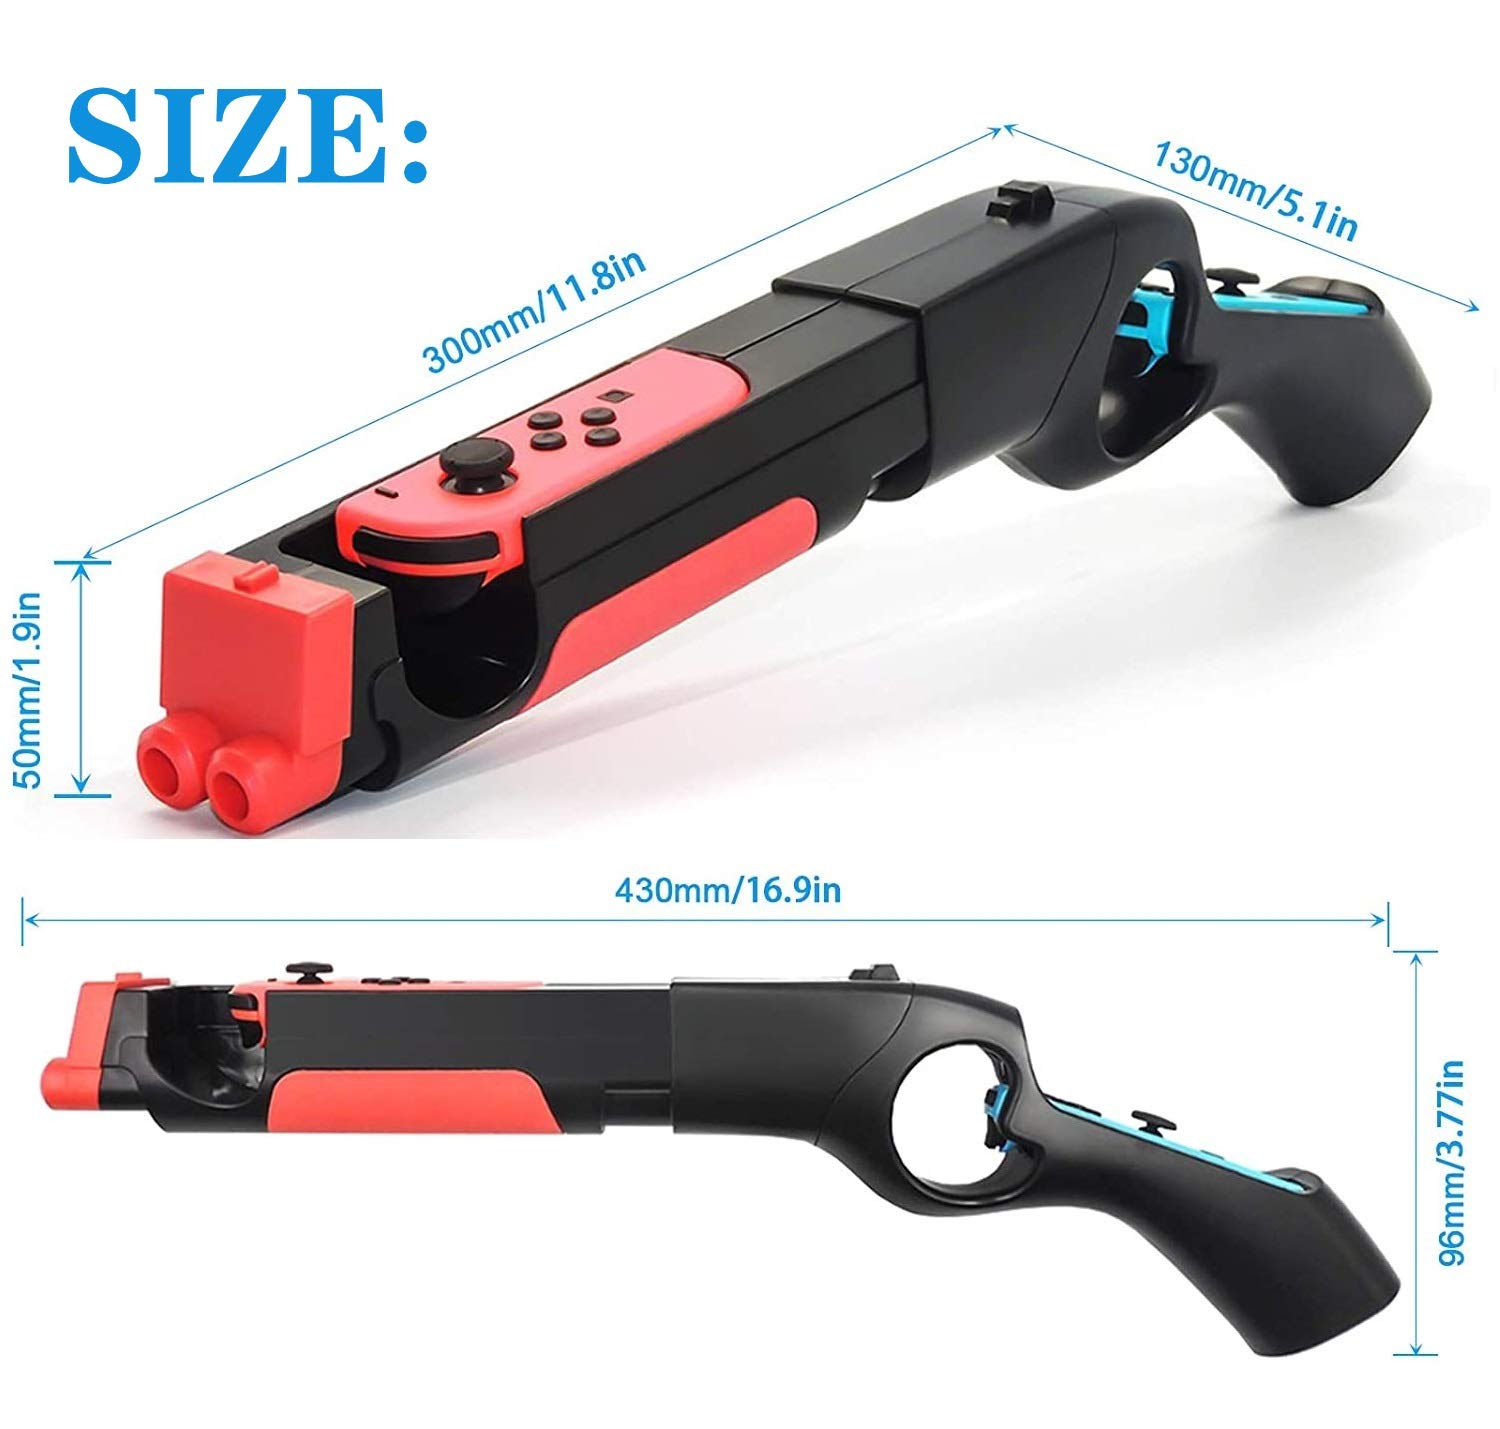 Nintendo Switch Gun Controller-Enterprise official website